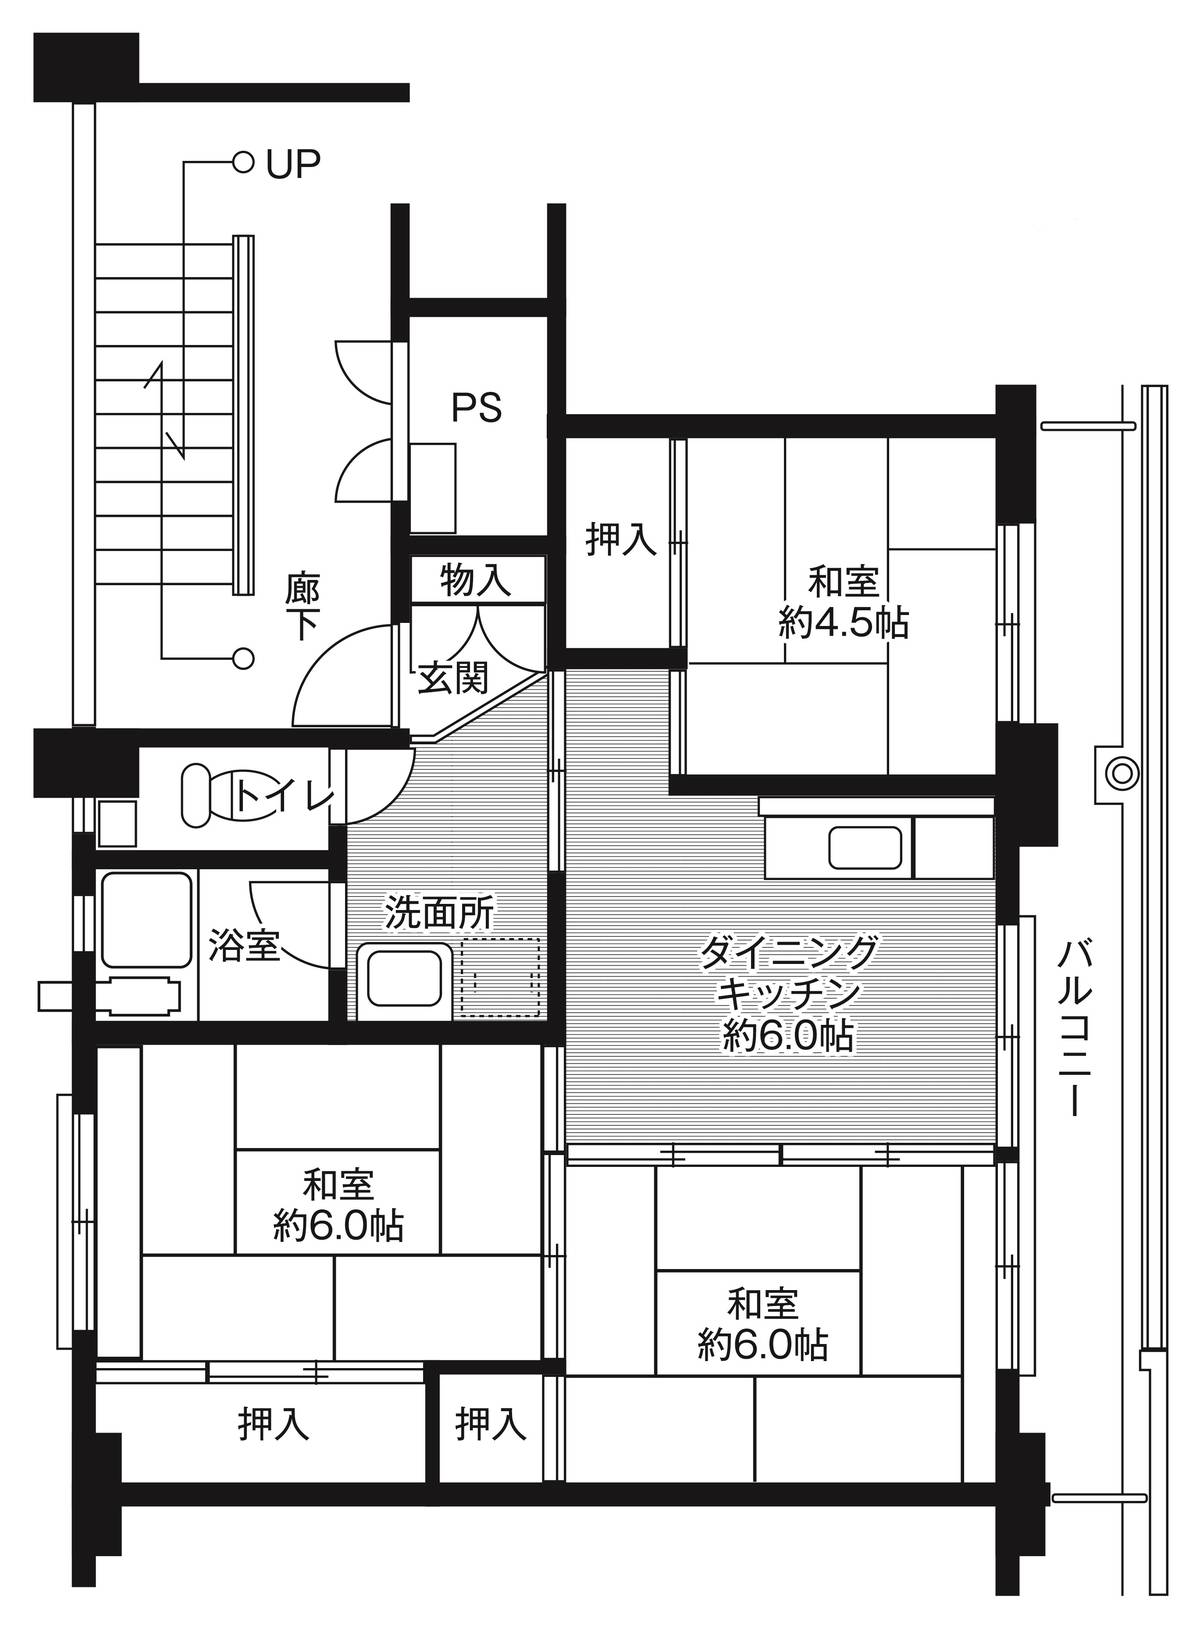 3DK floorplan of Village House Kamosho in Sanuki-shi